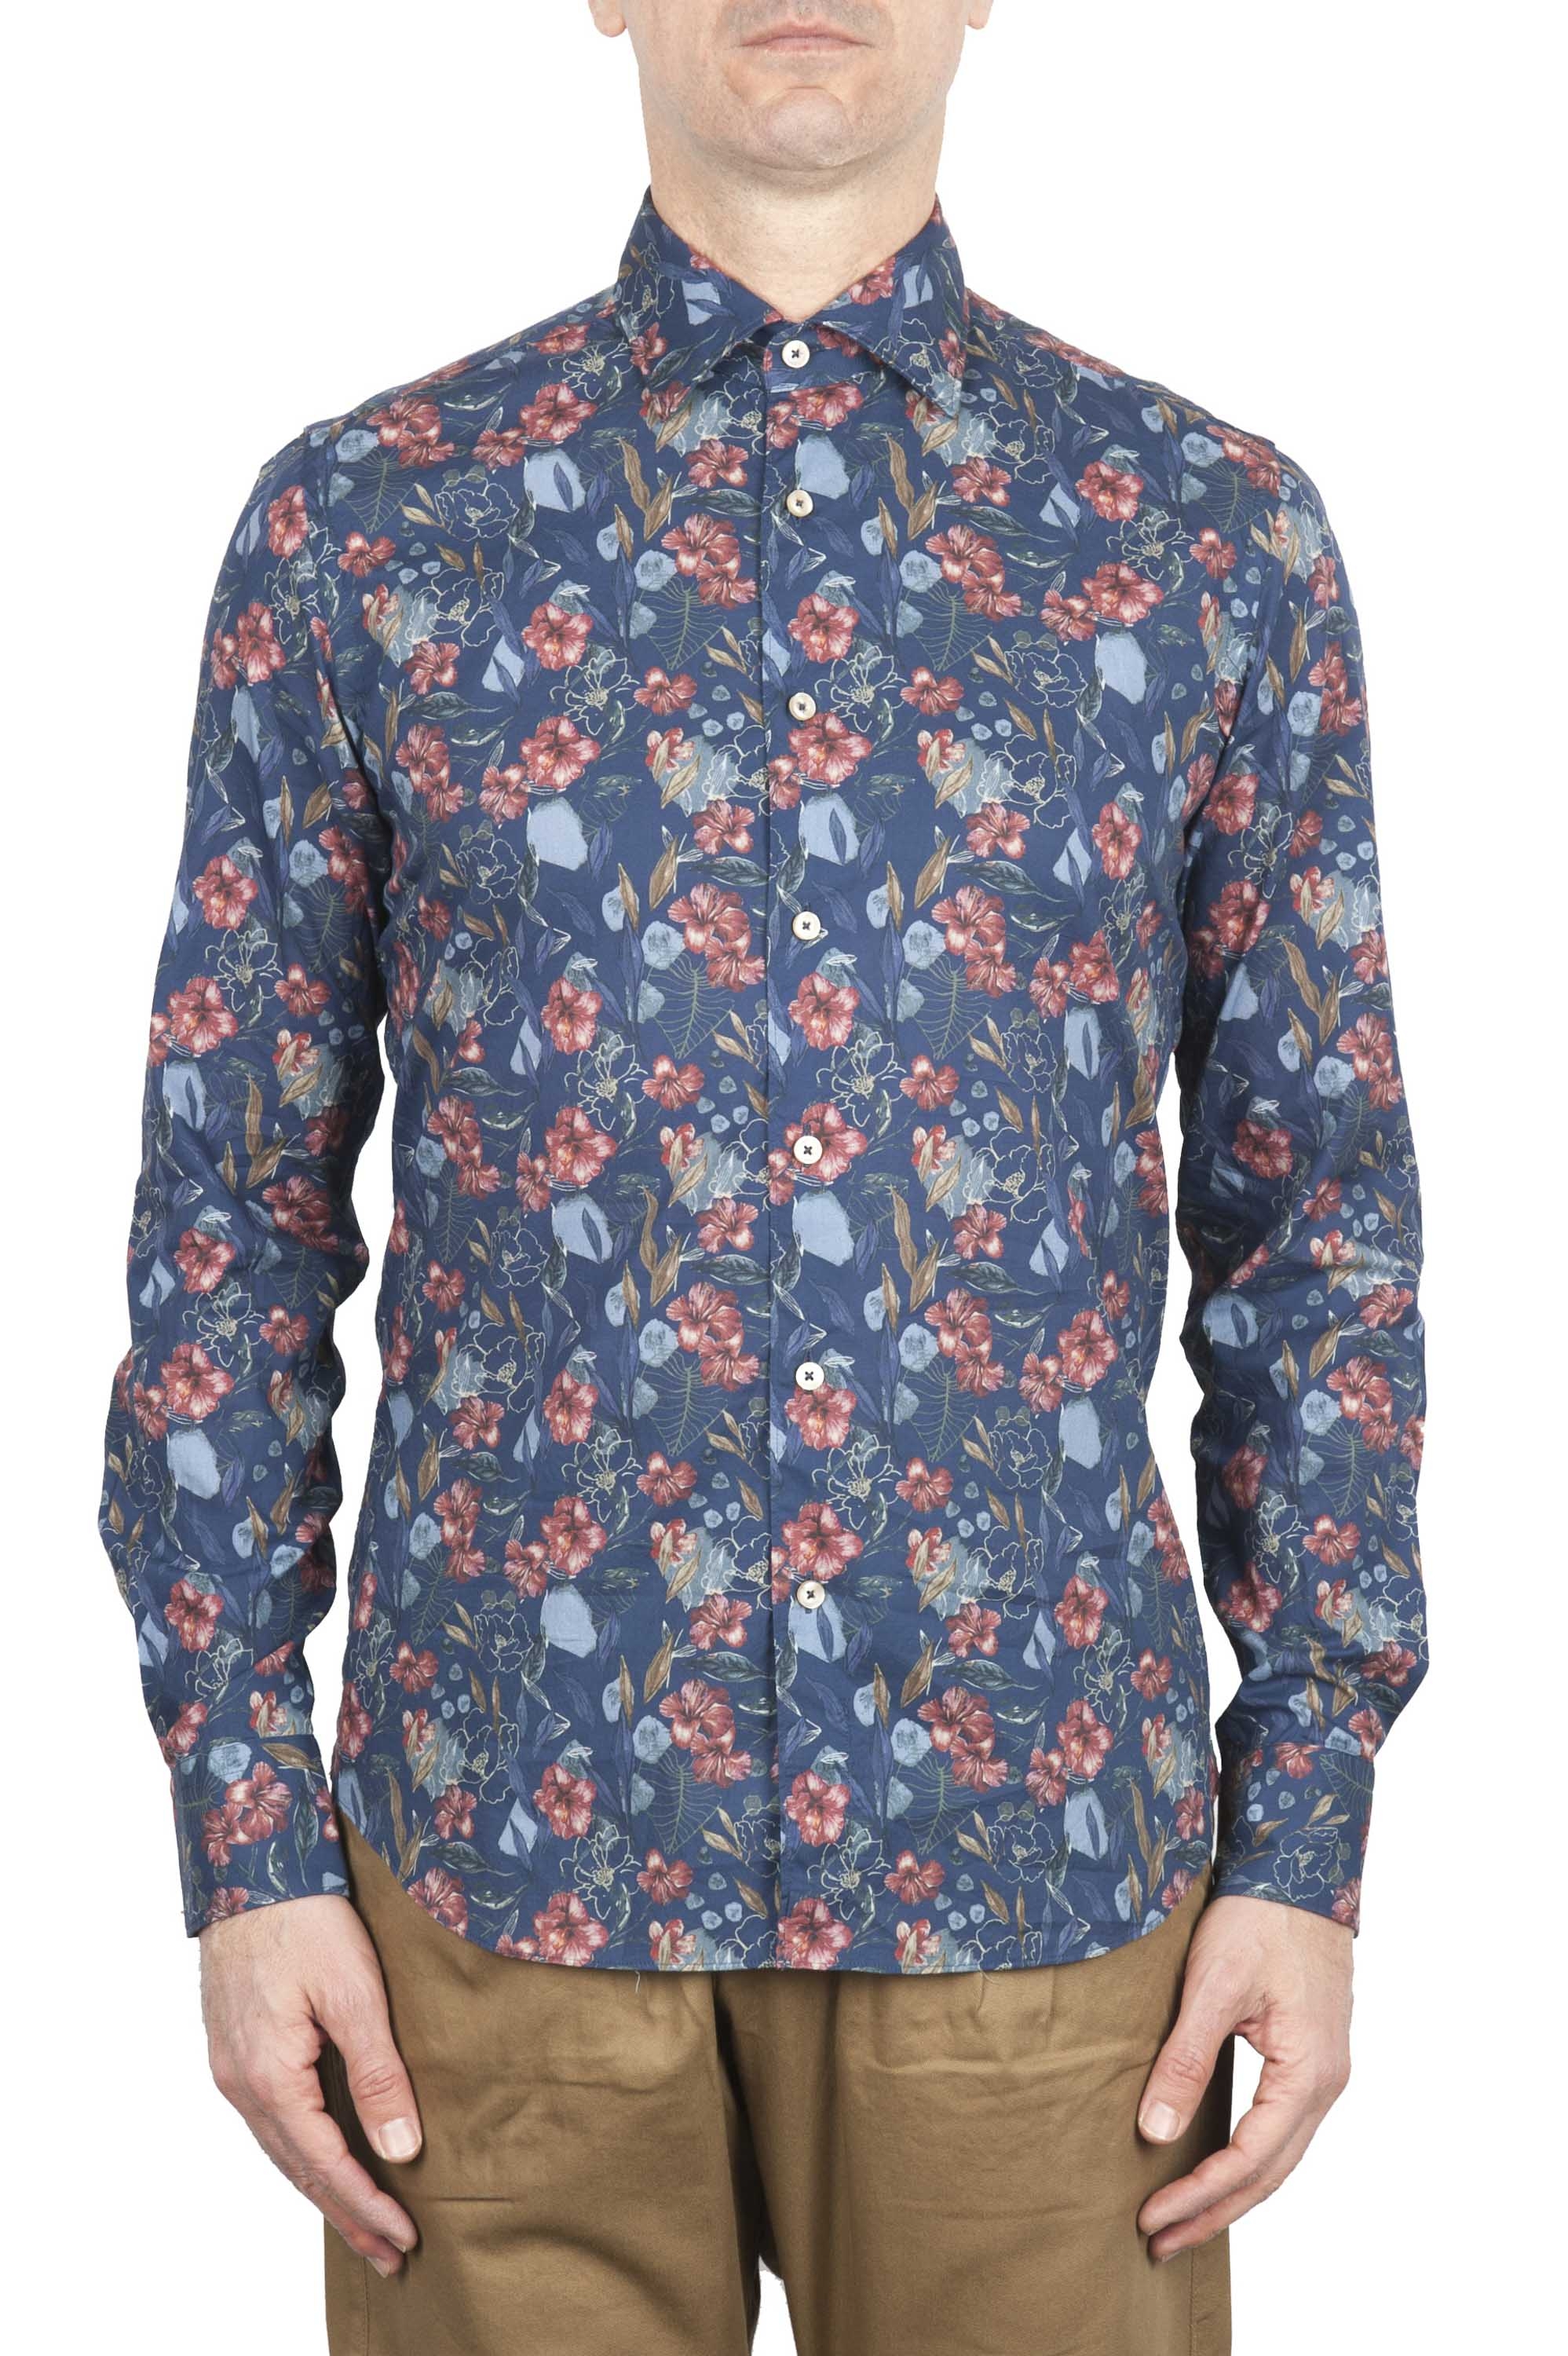 SBU 01600 Floral printed pattern blue cotton shirt 01